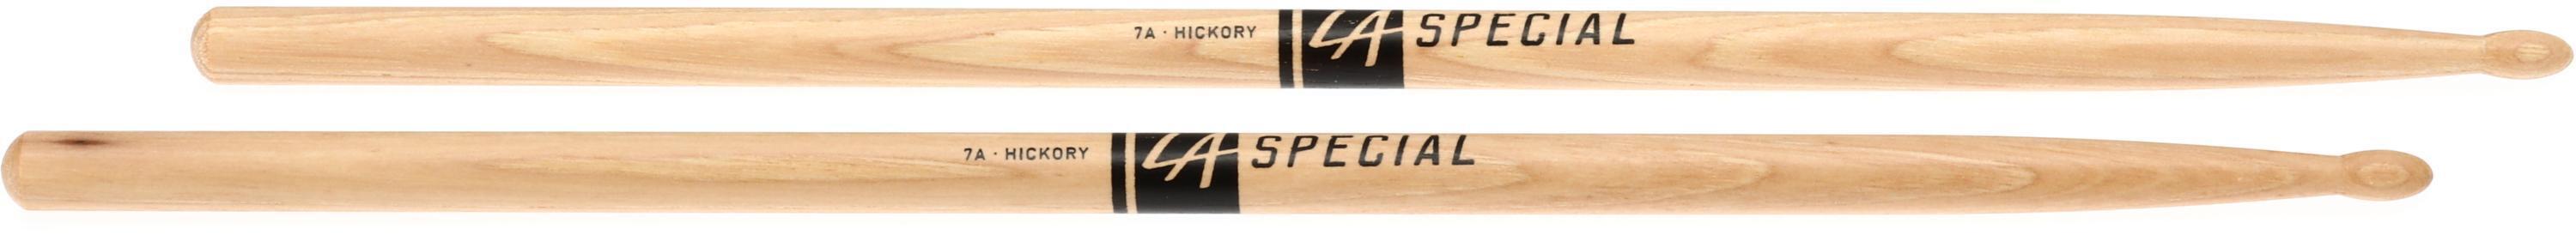 LA Specials Drum Sticks - 7A Drumsticks - Drum Sticks Set for Acoustic  Drums or Electronic Drums - Oval Nylon Tip - Hickory Drumsticks -  Consistent